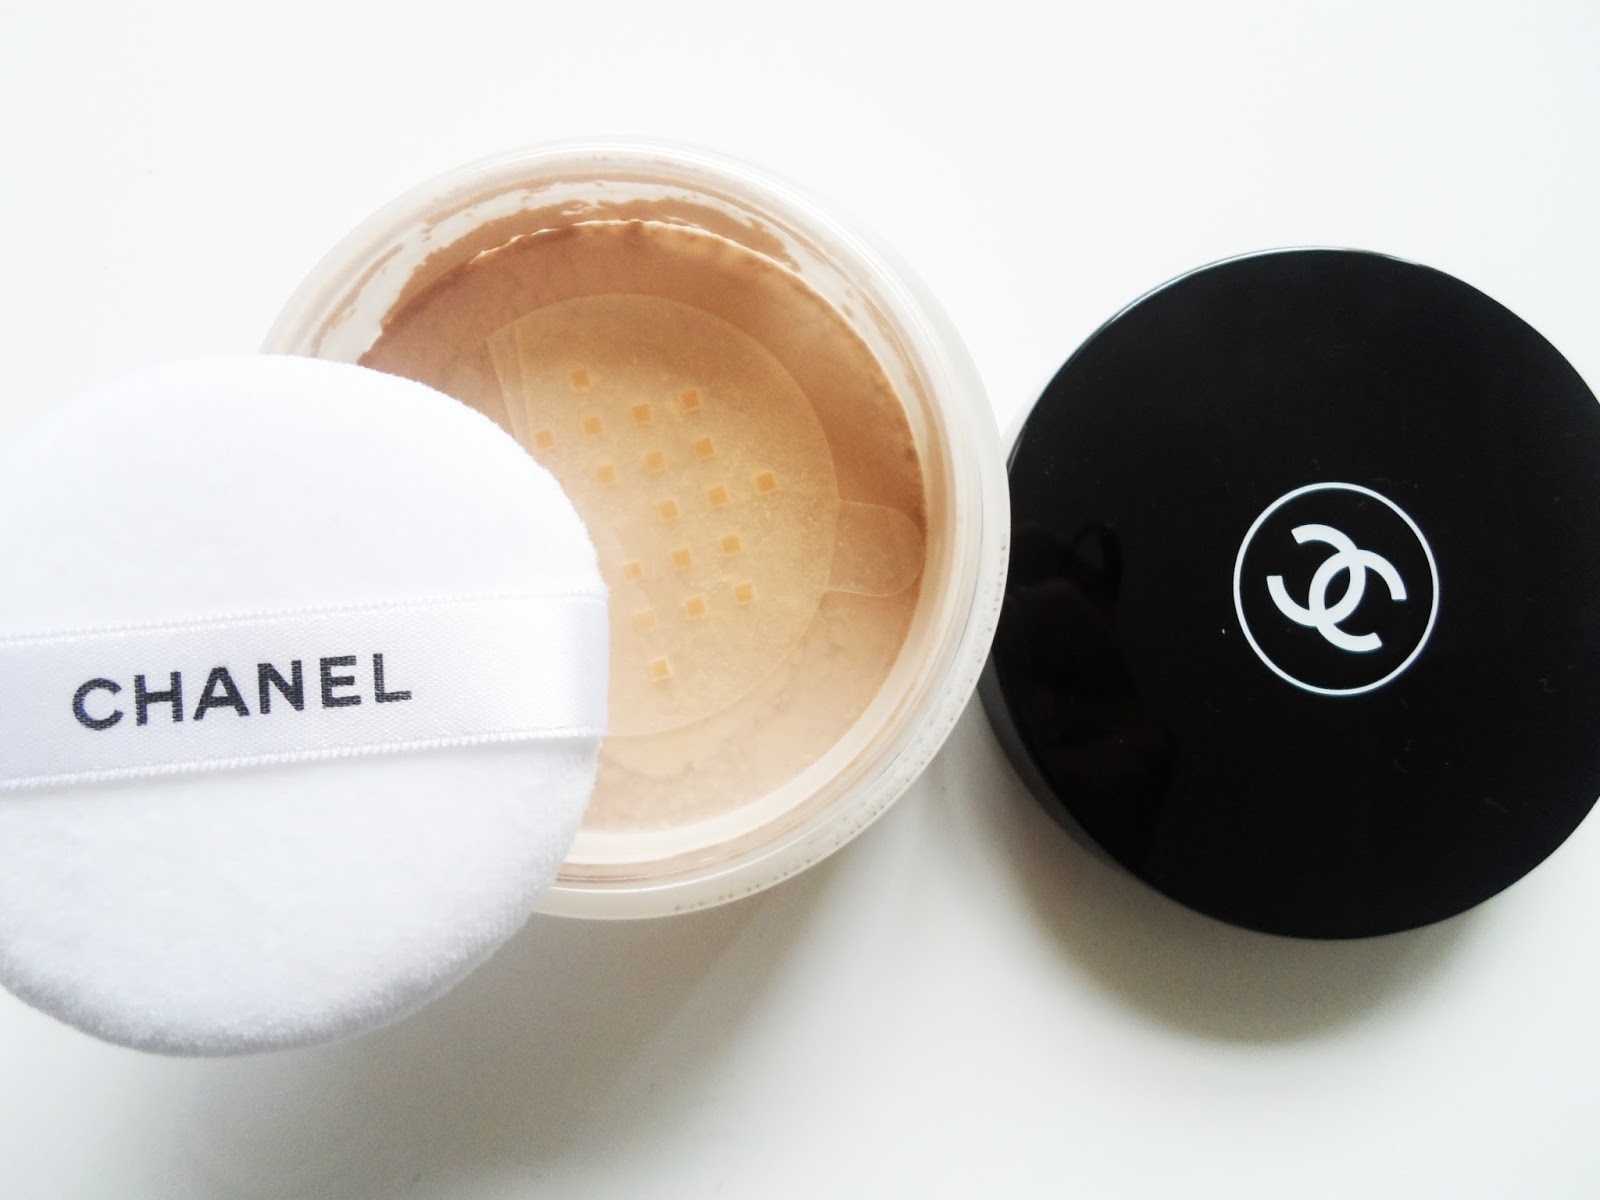 Review: Chanel Natural Finish Loose Powder